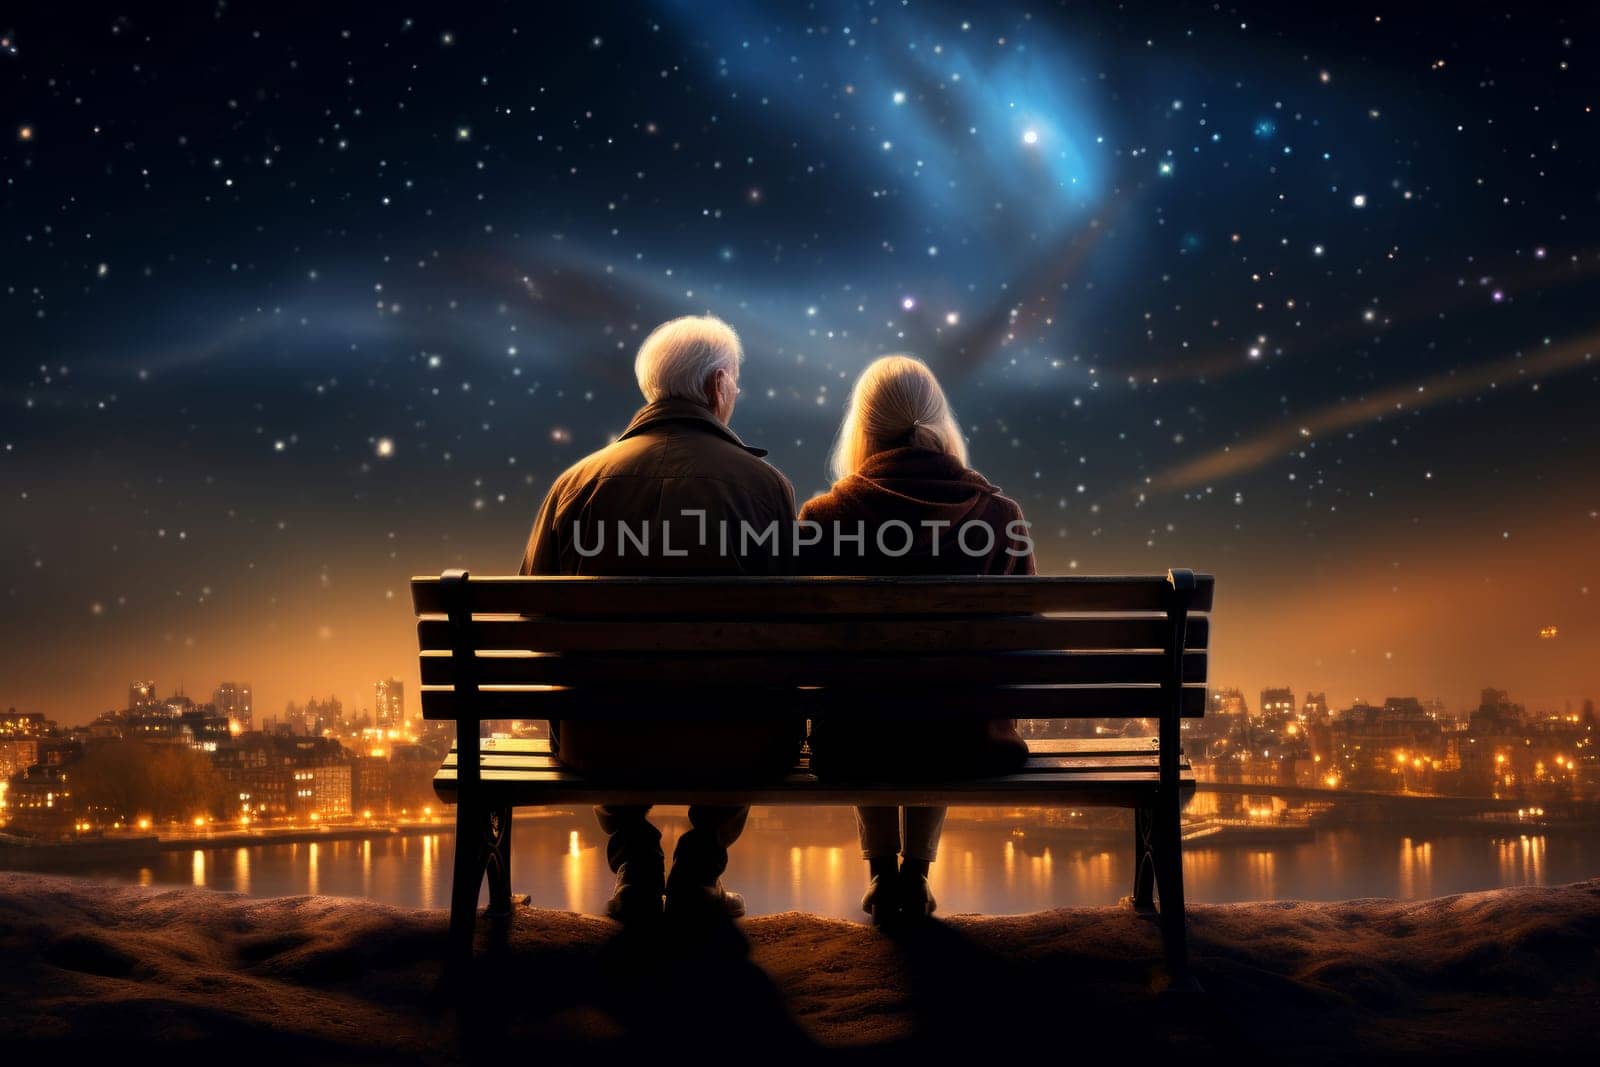 Grandparents sitting on bench. Night stars sky. Generate Ai